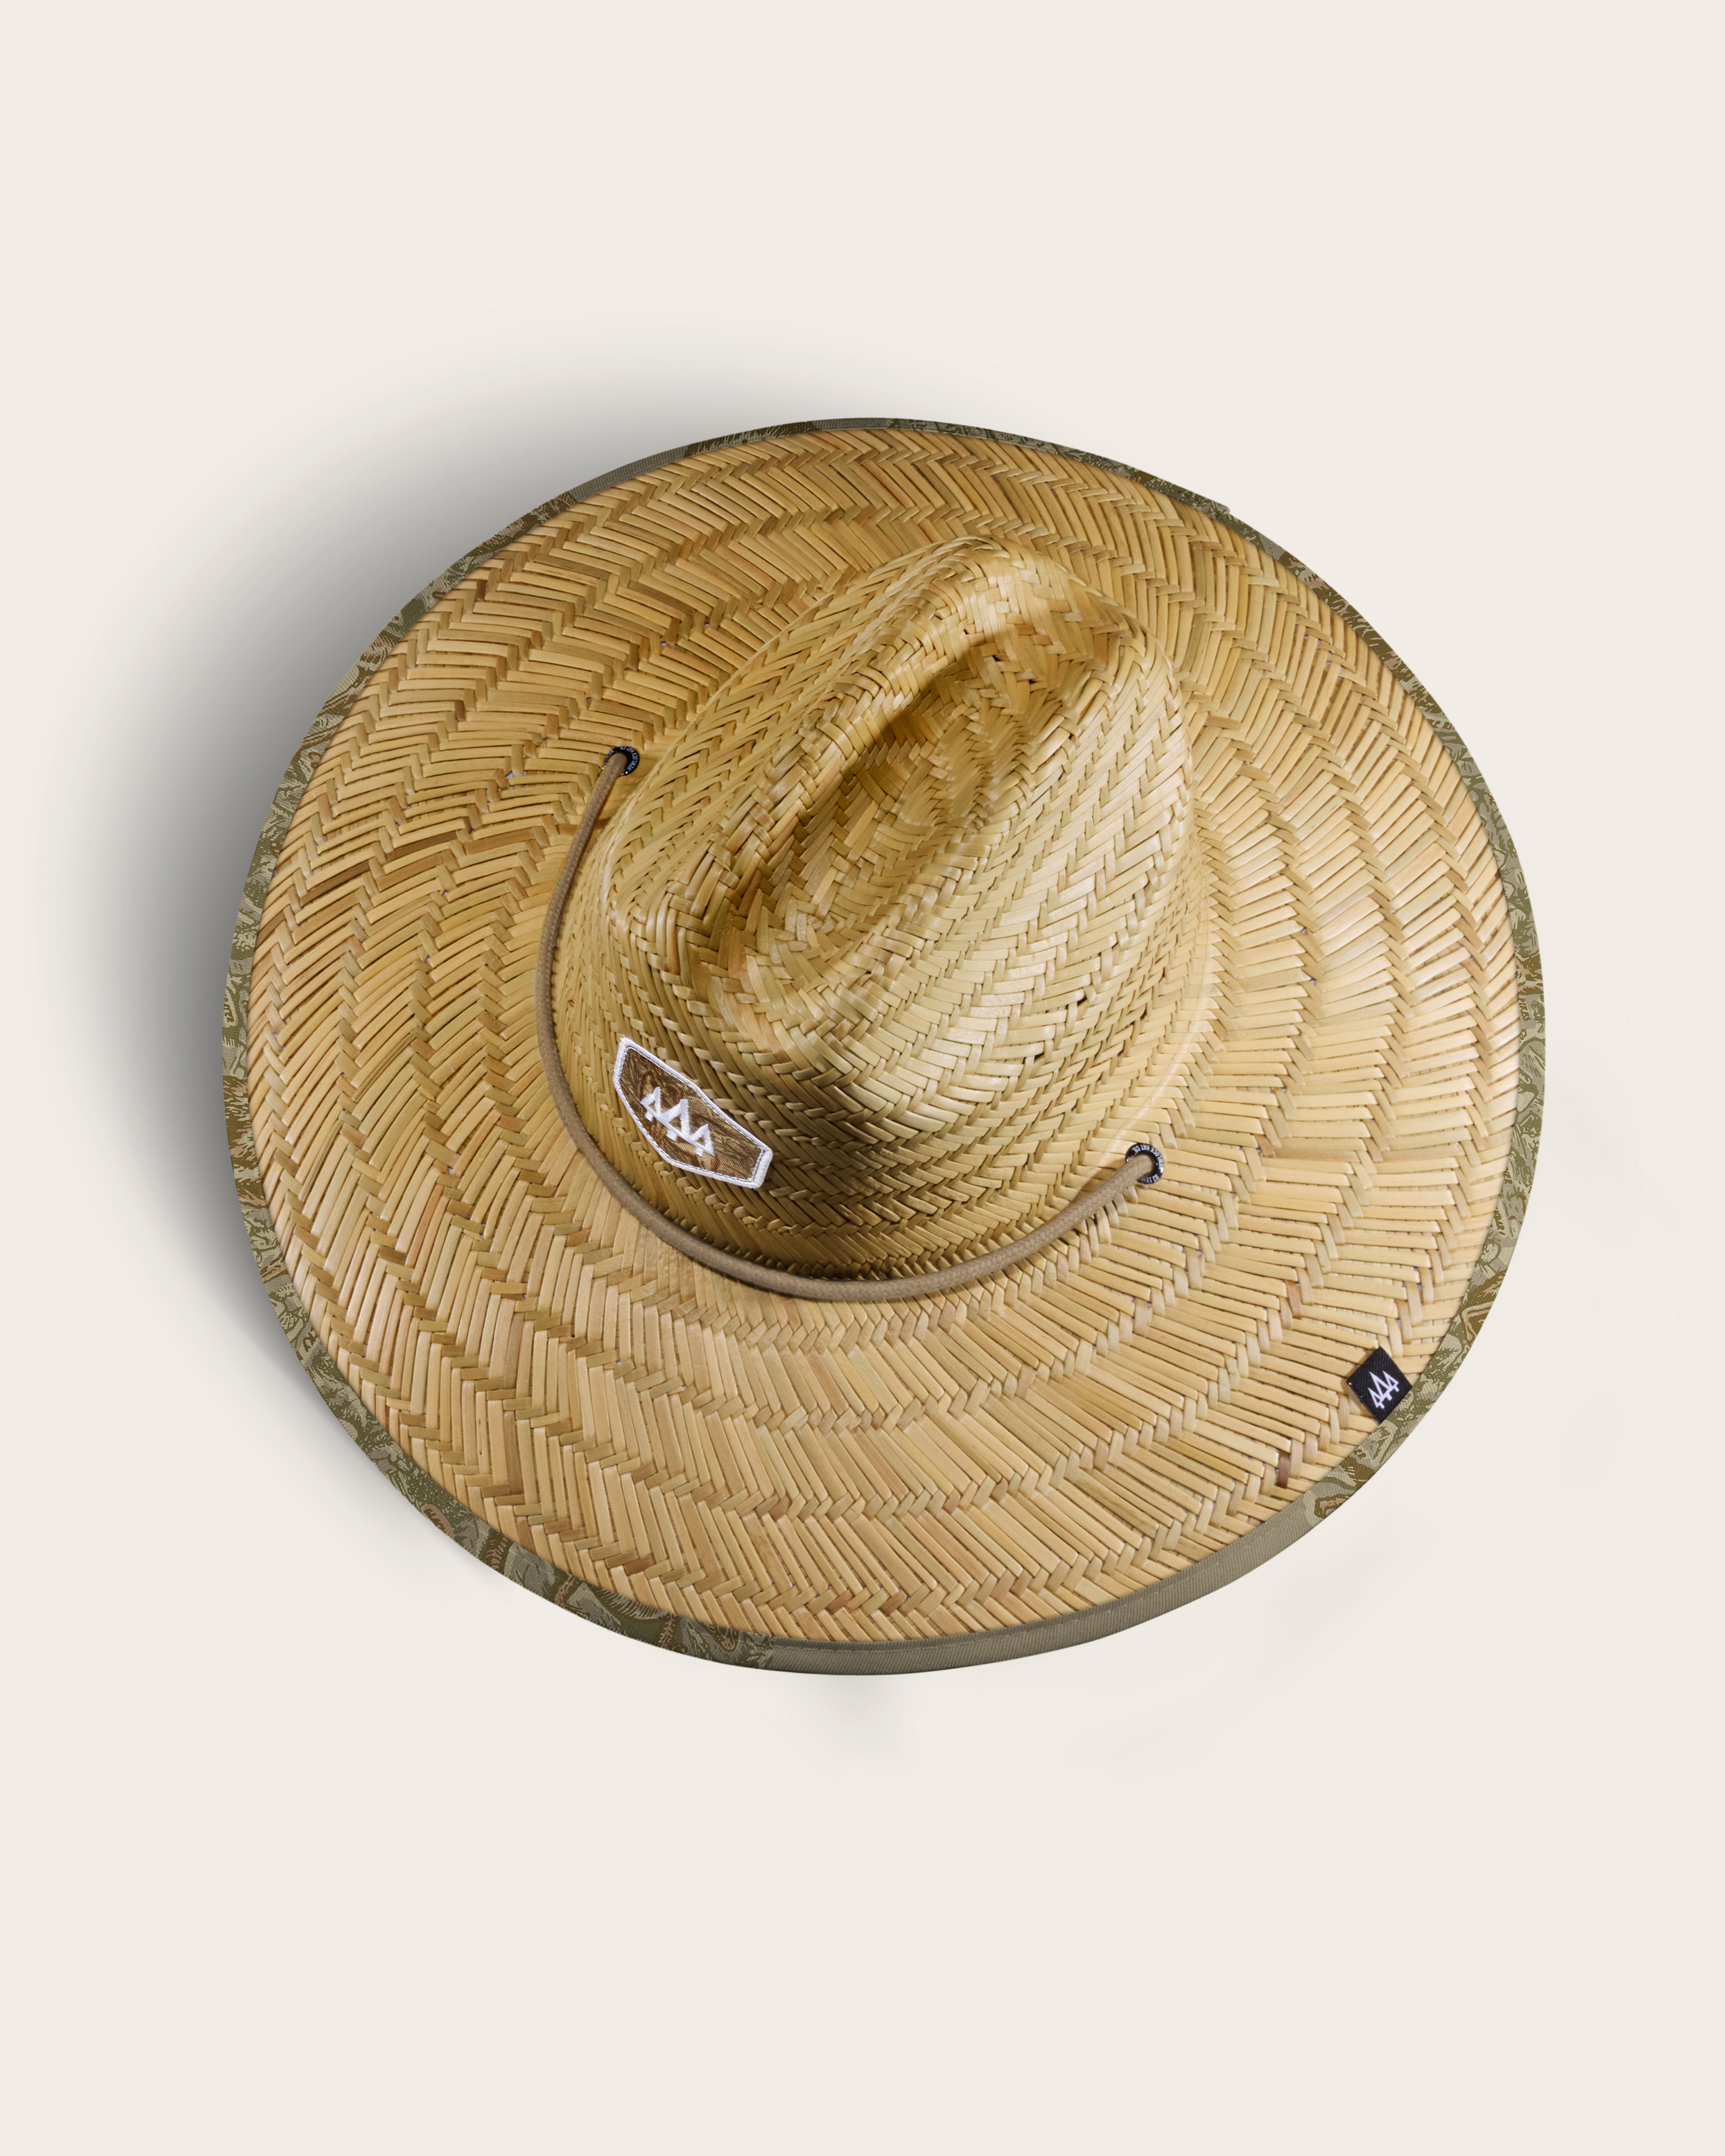 Hemlock Wildwood straw lifeguard hat with wildlife pattern top of hat